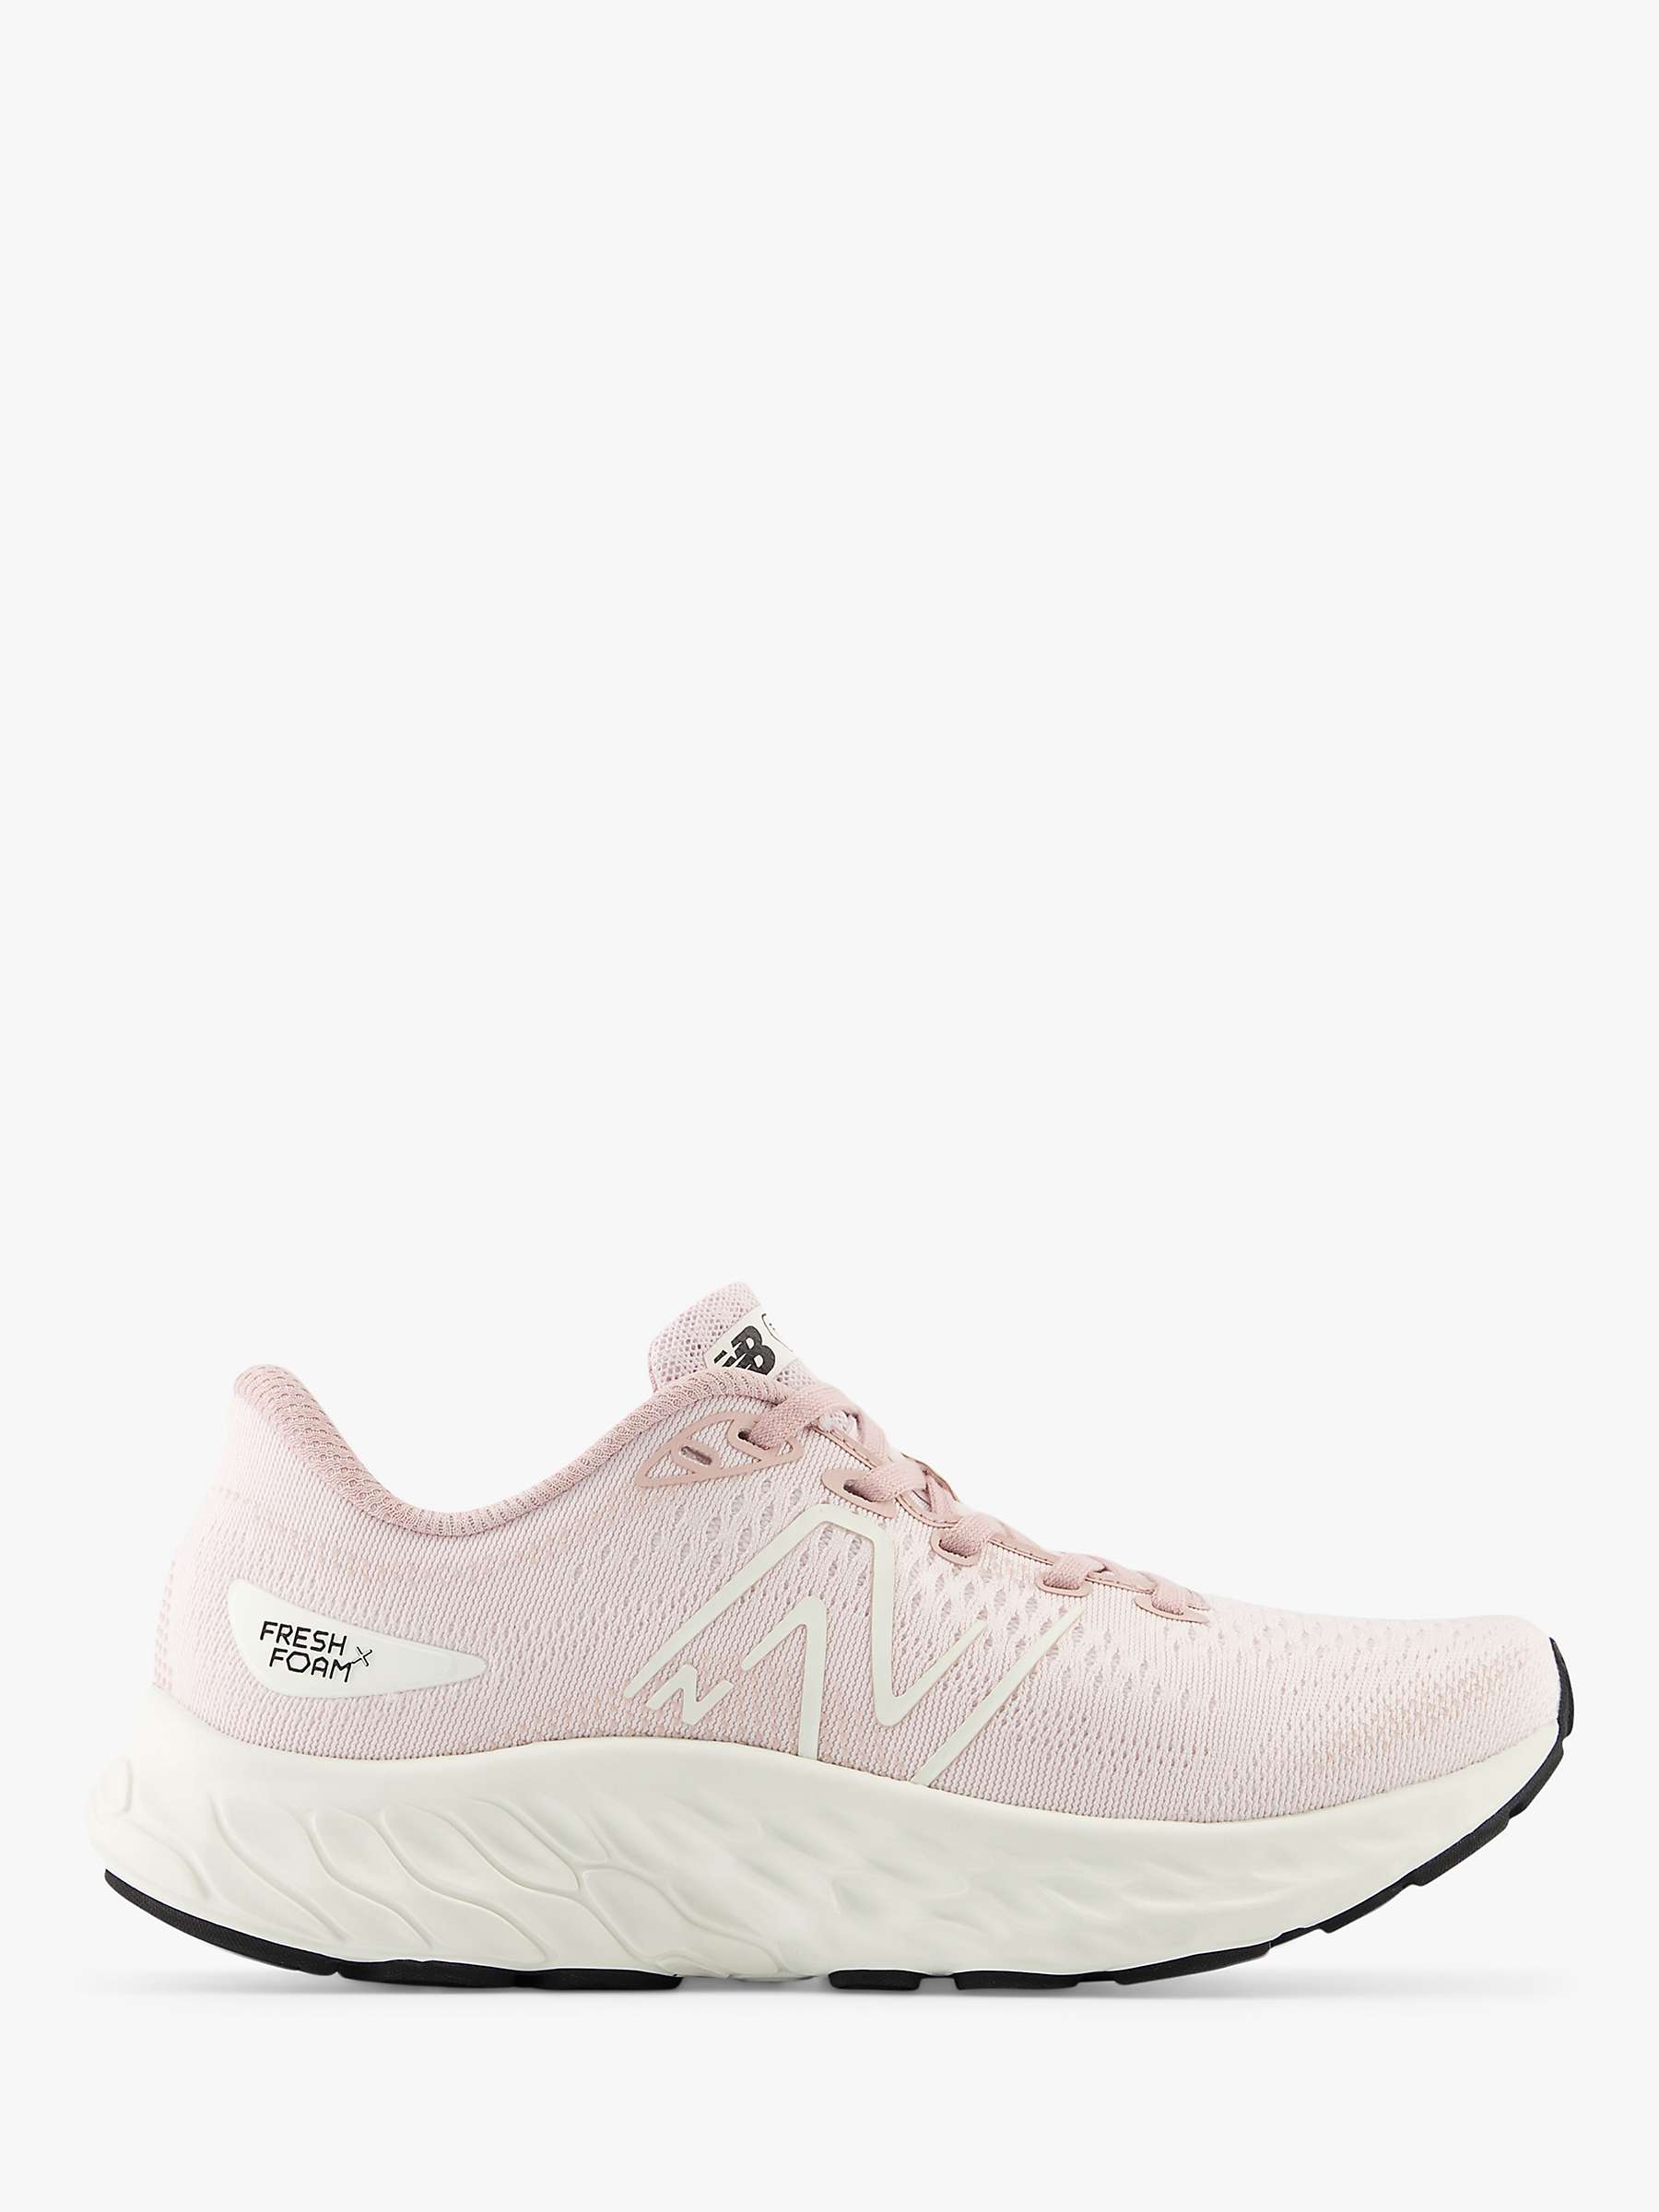 Buy New Balance Fresh Foam X Evoz ST Women's Running Shoes, Pink Granite 667 Online at johnlewis.com